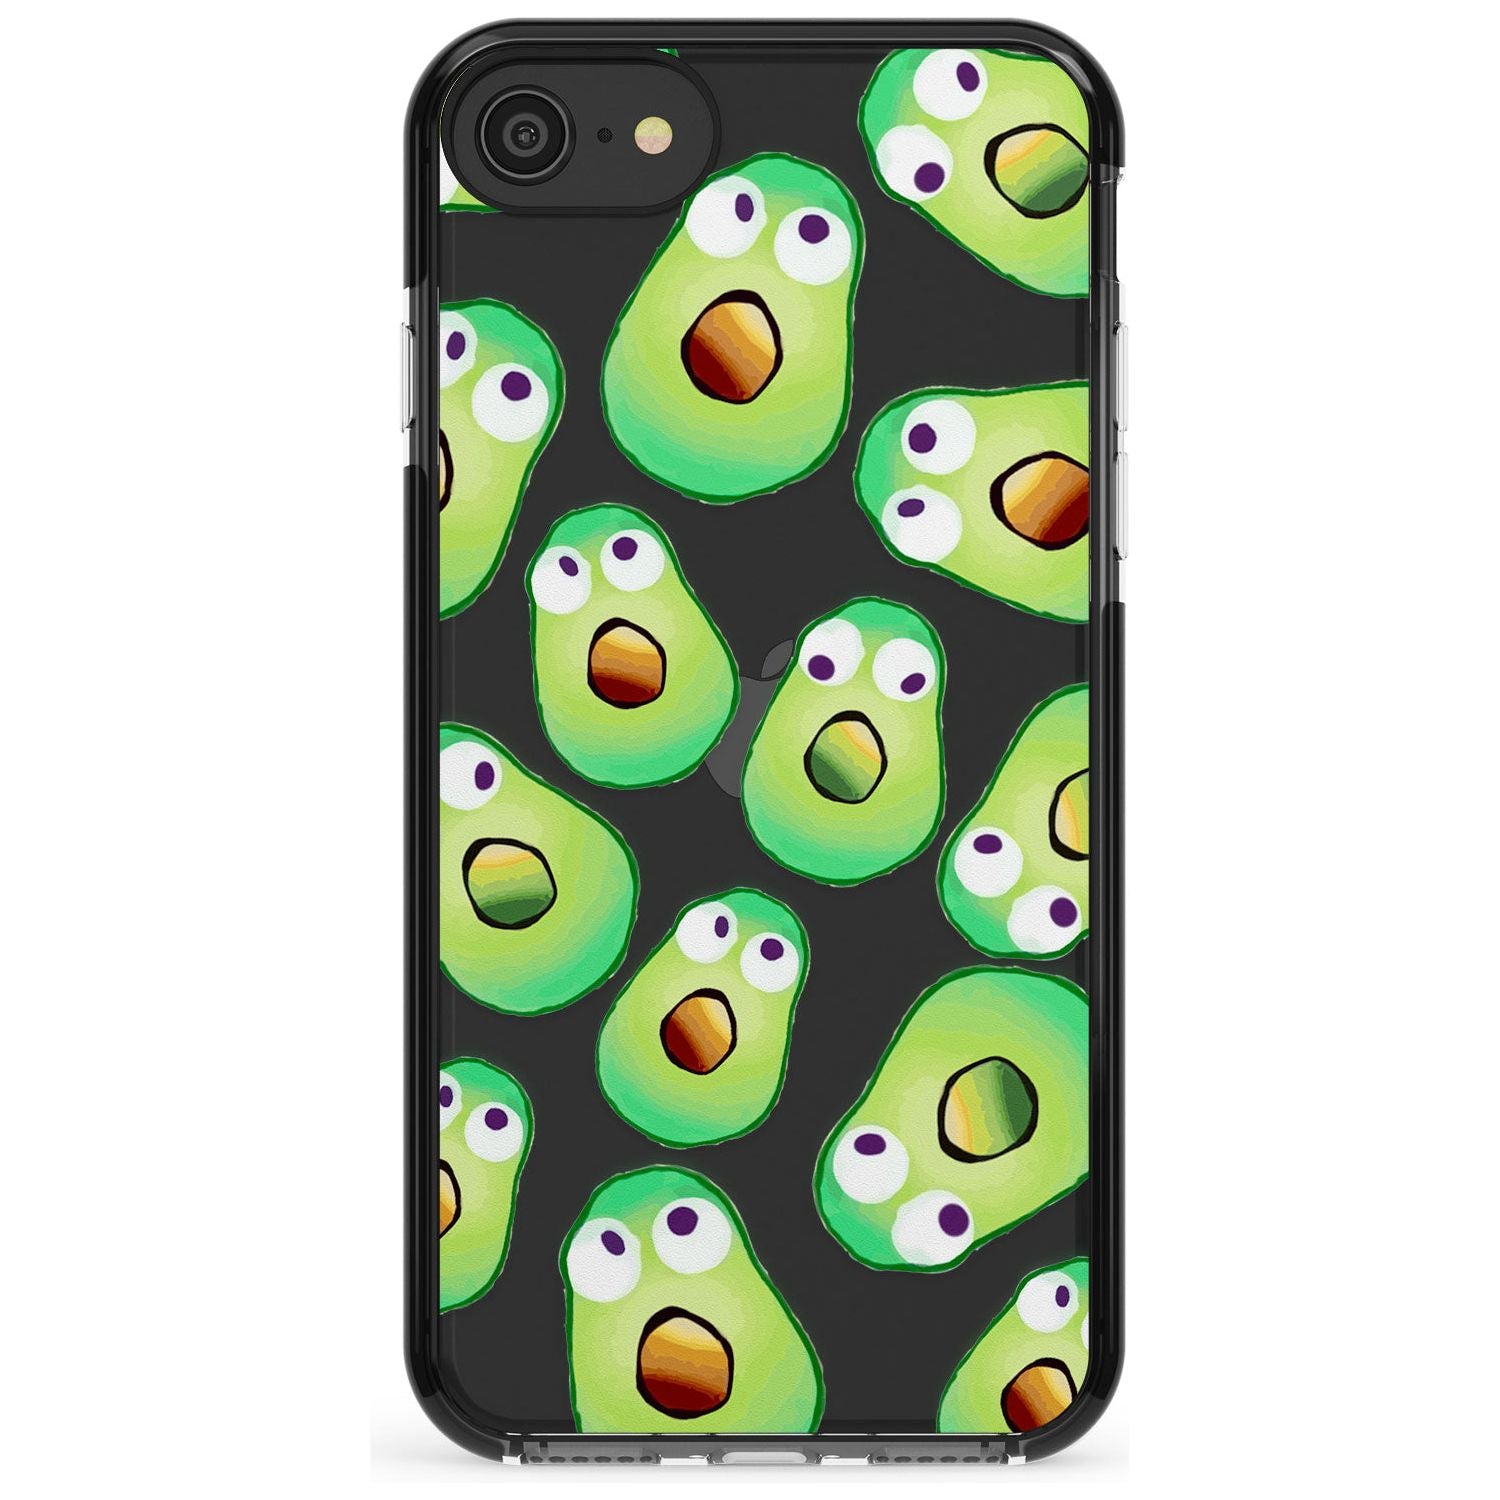 Shocked Avocados Black Impact Phone Case for iPhone SE 8 7 Plus